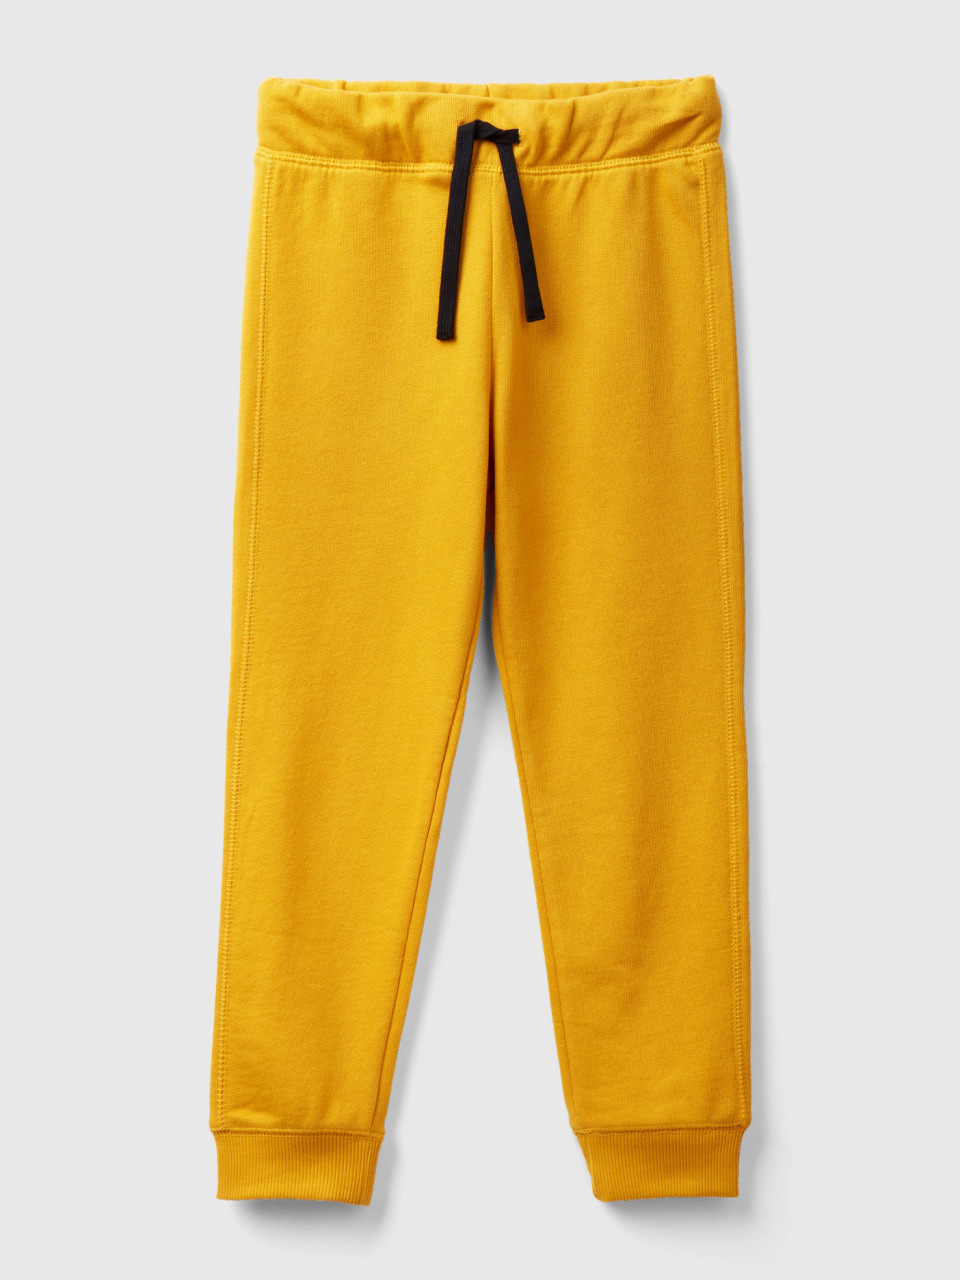 Benetton, 100% Cotton Sweatpants, Yellow, Kids